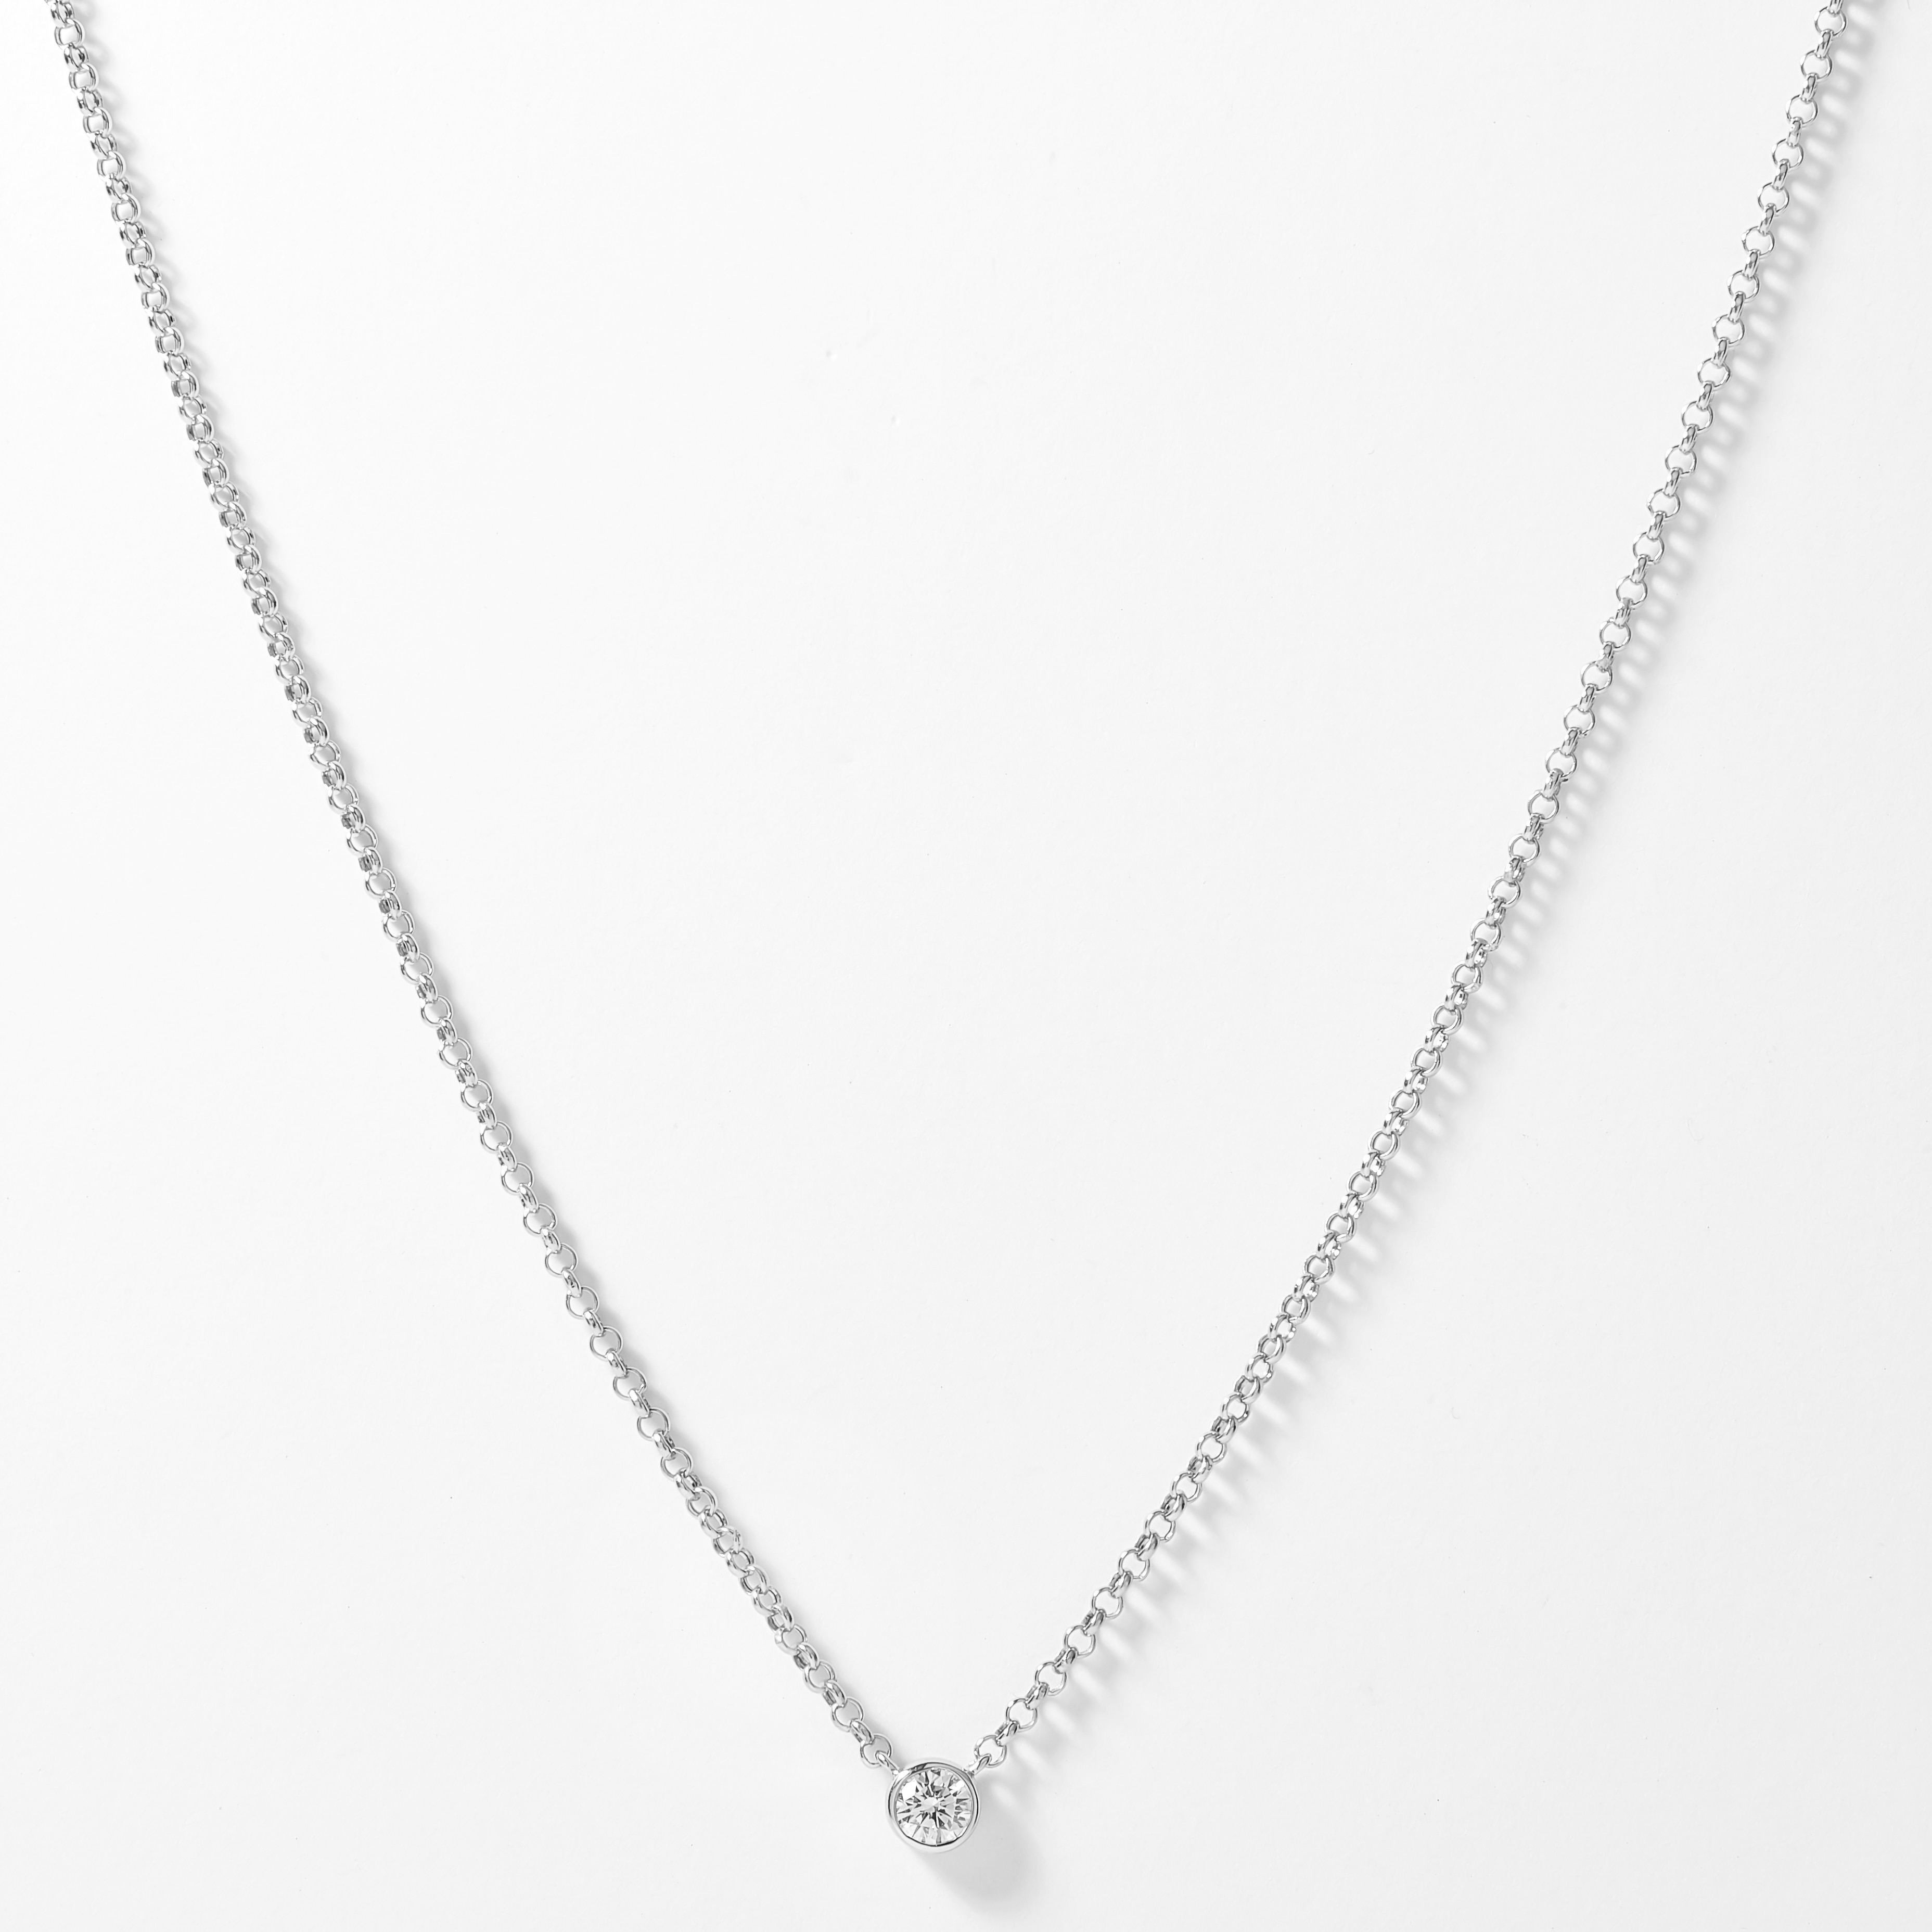 Jewellery - Necklaces & Pendants - Necklaces - EVERA Diamonds 14K